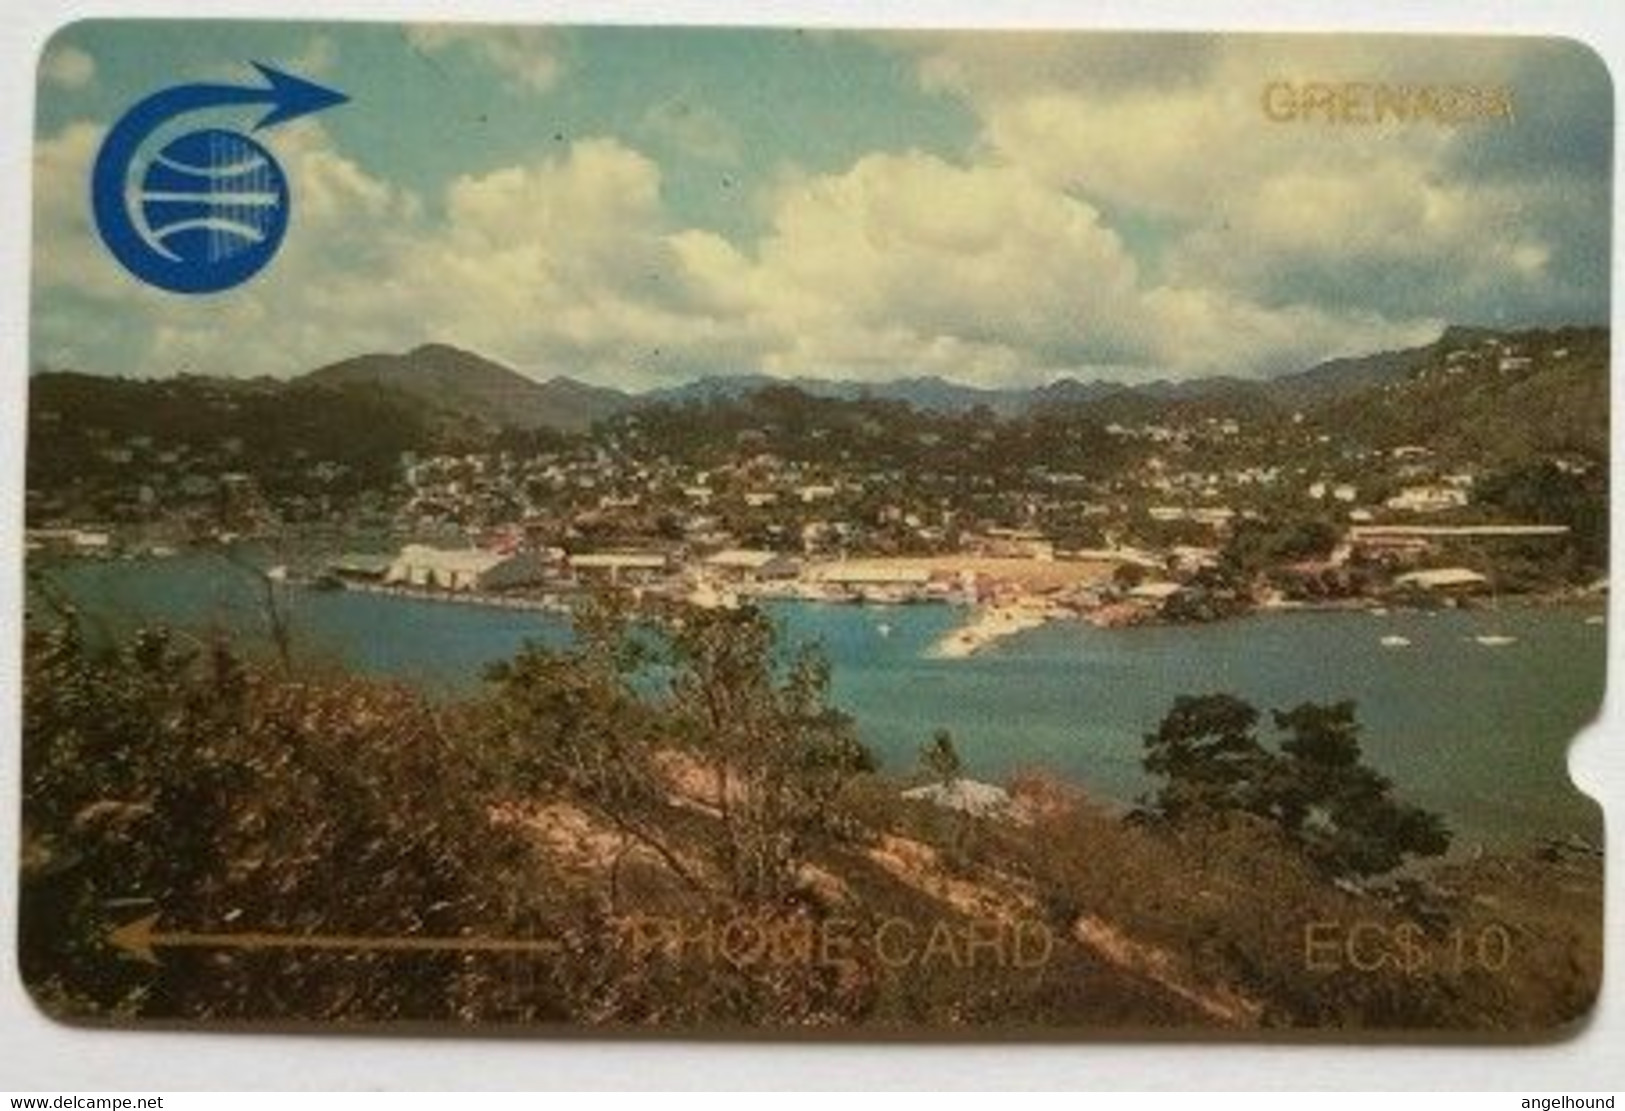 Grenada Cable And Wireless 1CGRB "St George EC$10 Deep Notch" - Grenada